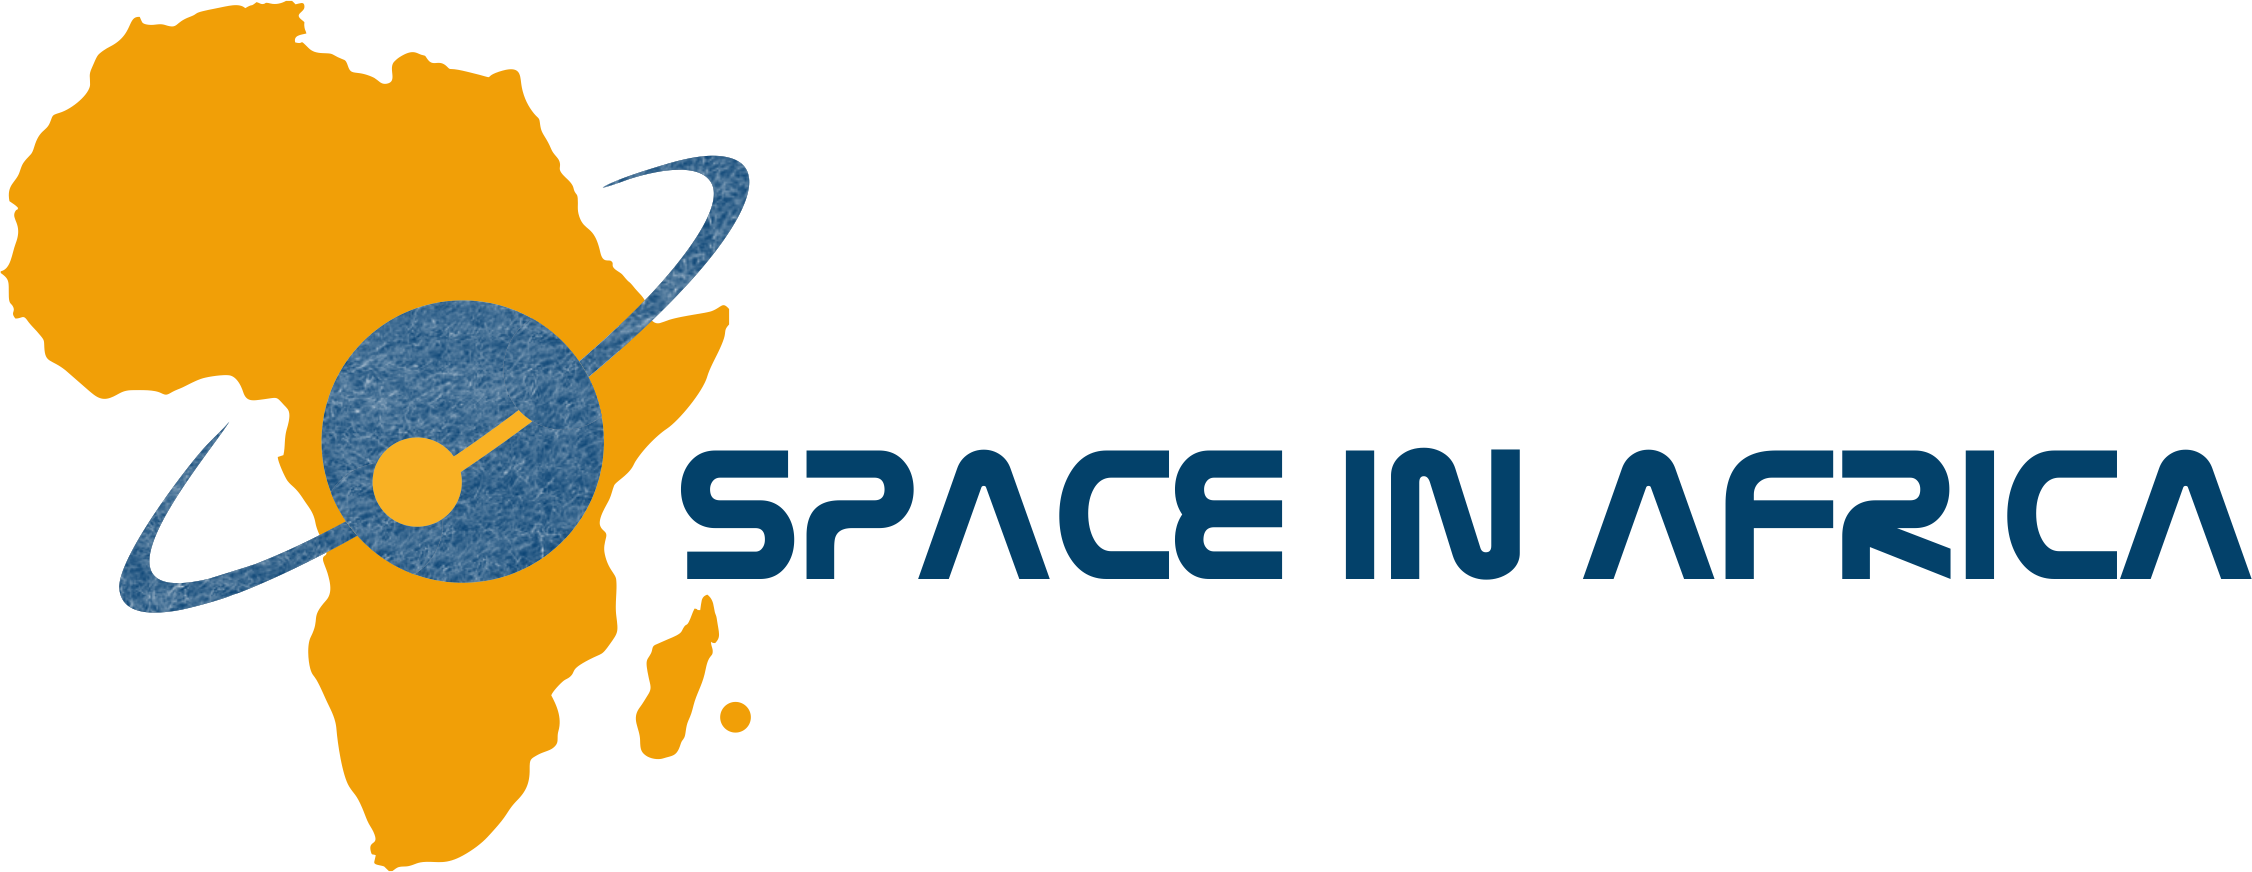 Space in Africa Full Logo